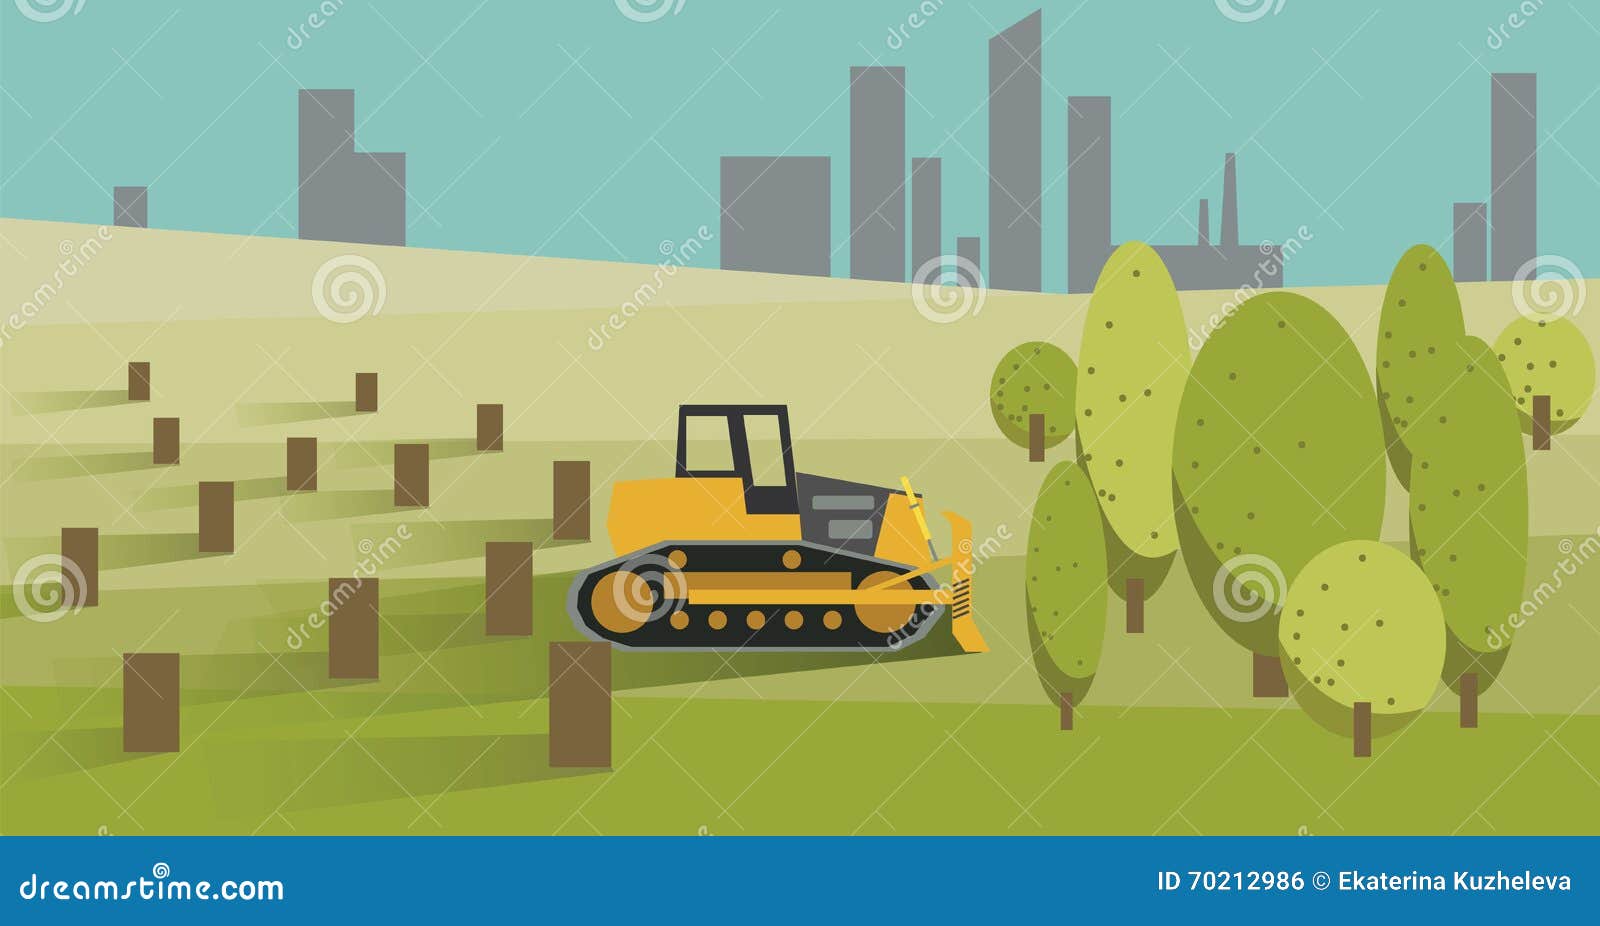 deforestation with yellow bulldozer.  